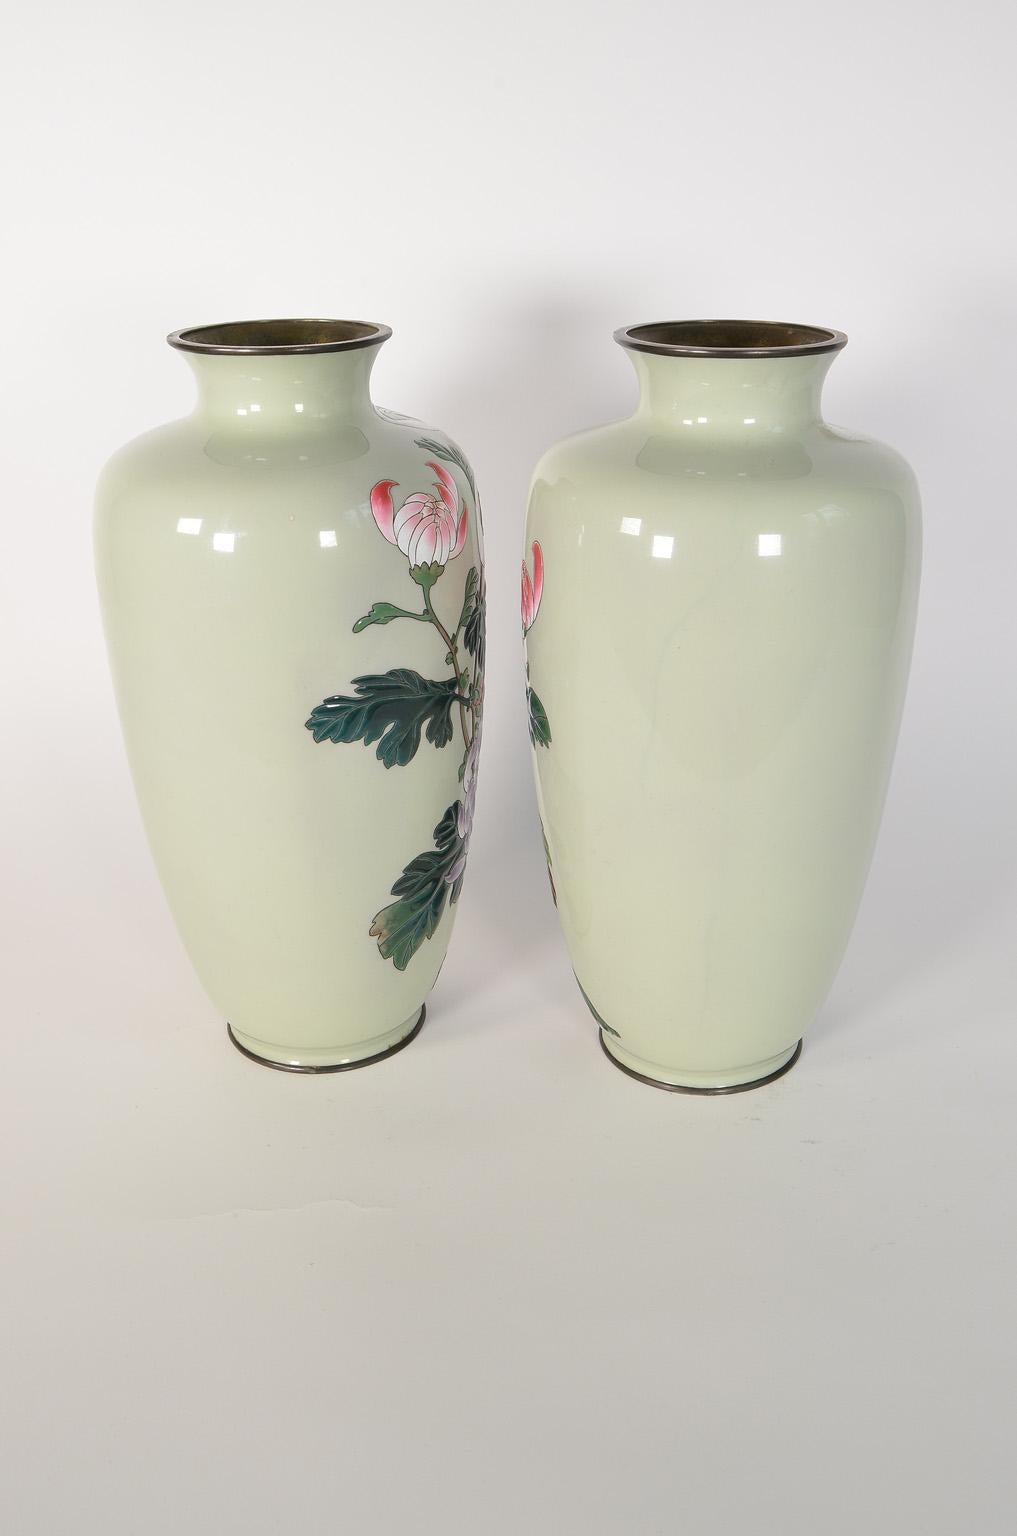 Pair of Japanese Vases 19th Century Bronze Enamel Cloisonne Meiji Period 1